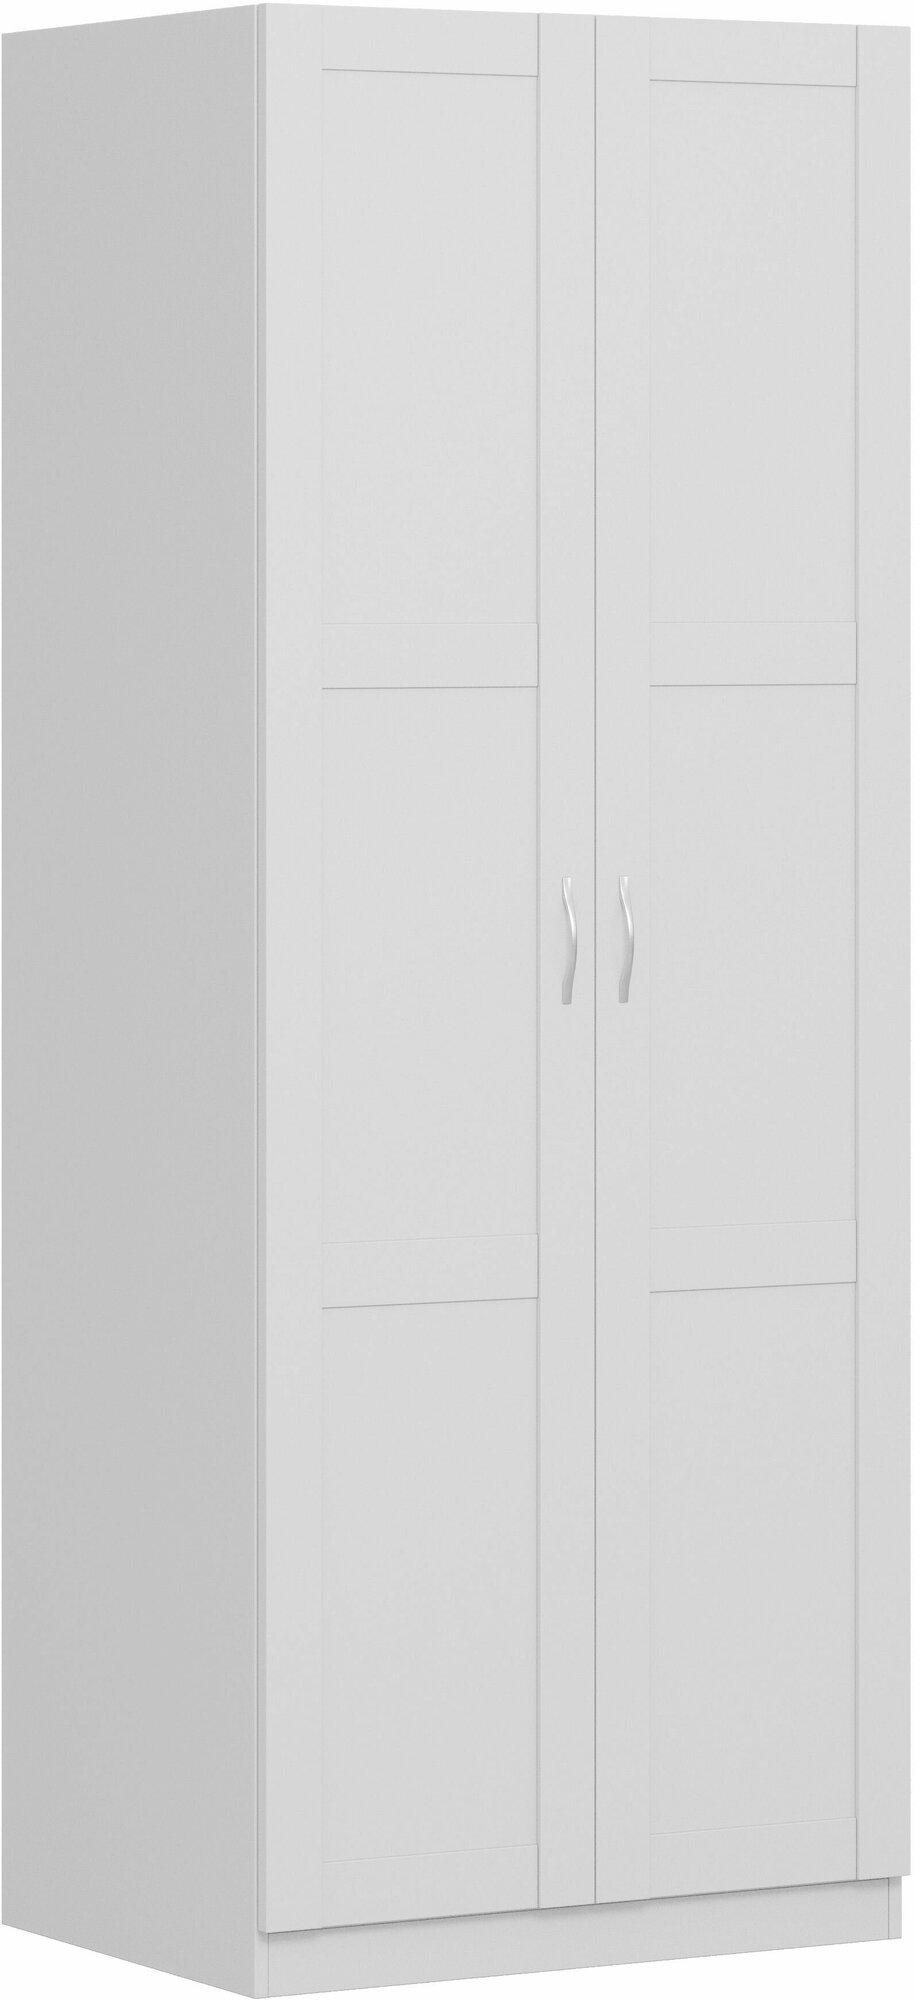 Шкаф ГУД ЛАКК Пегас, 2 двери сборные, 78х58х202 см, белый